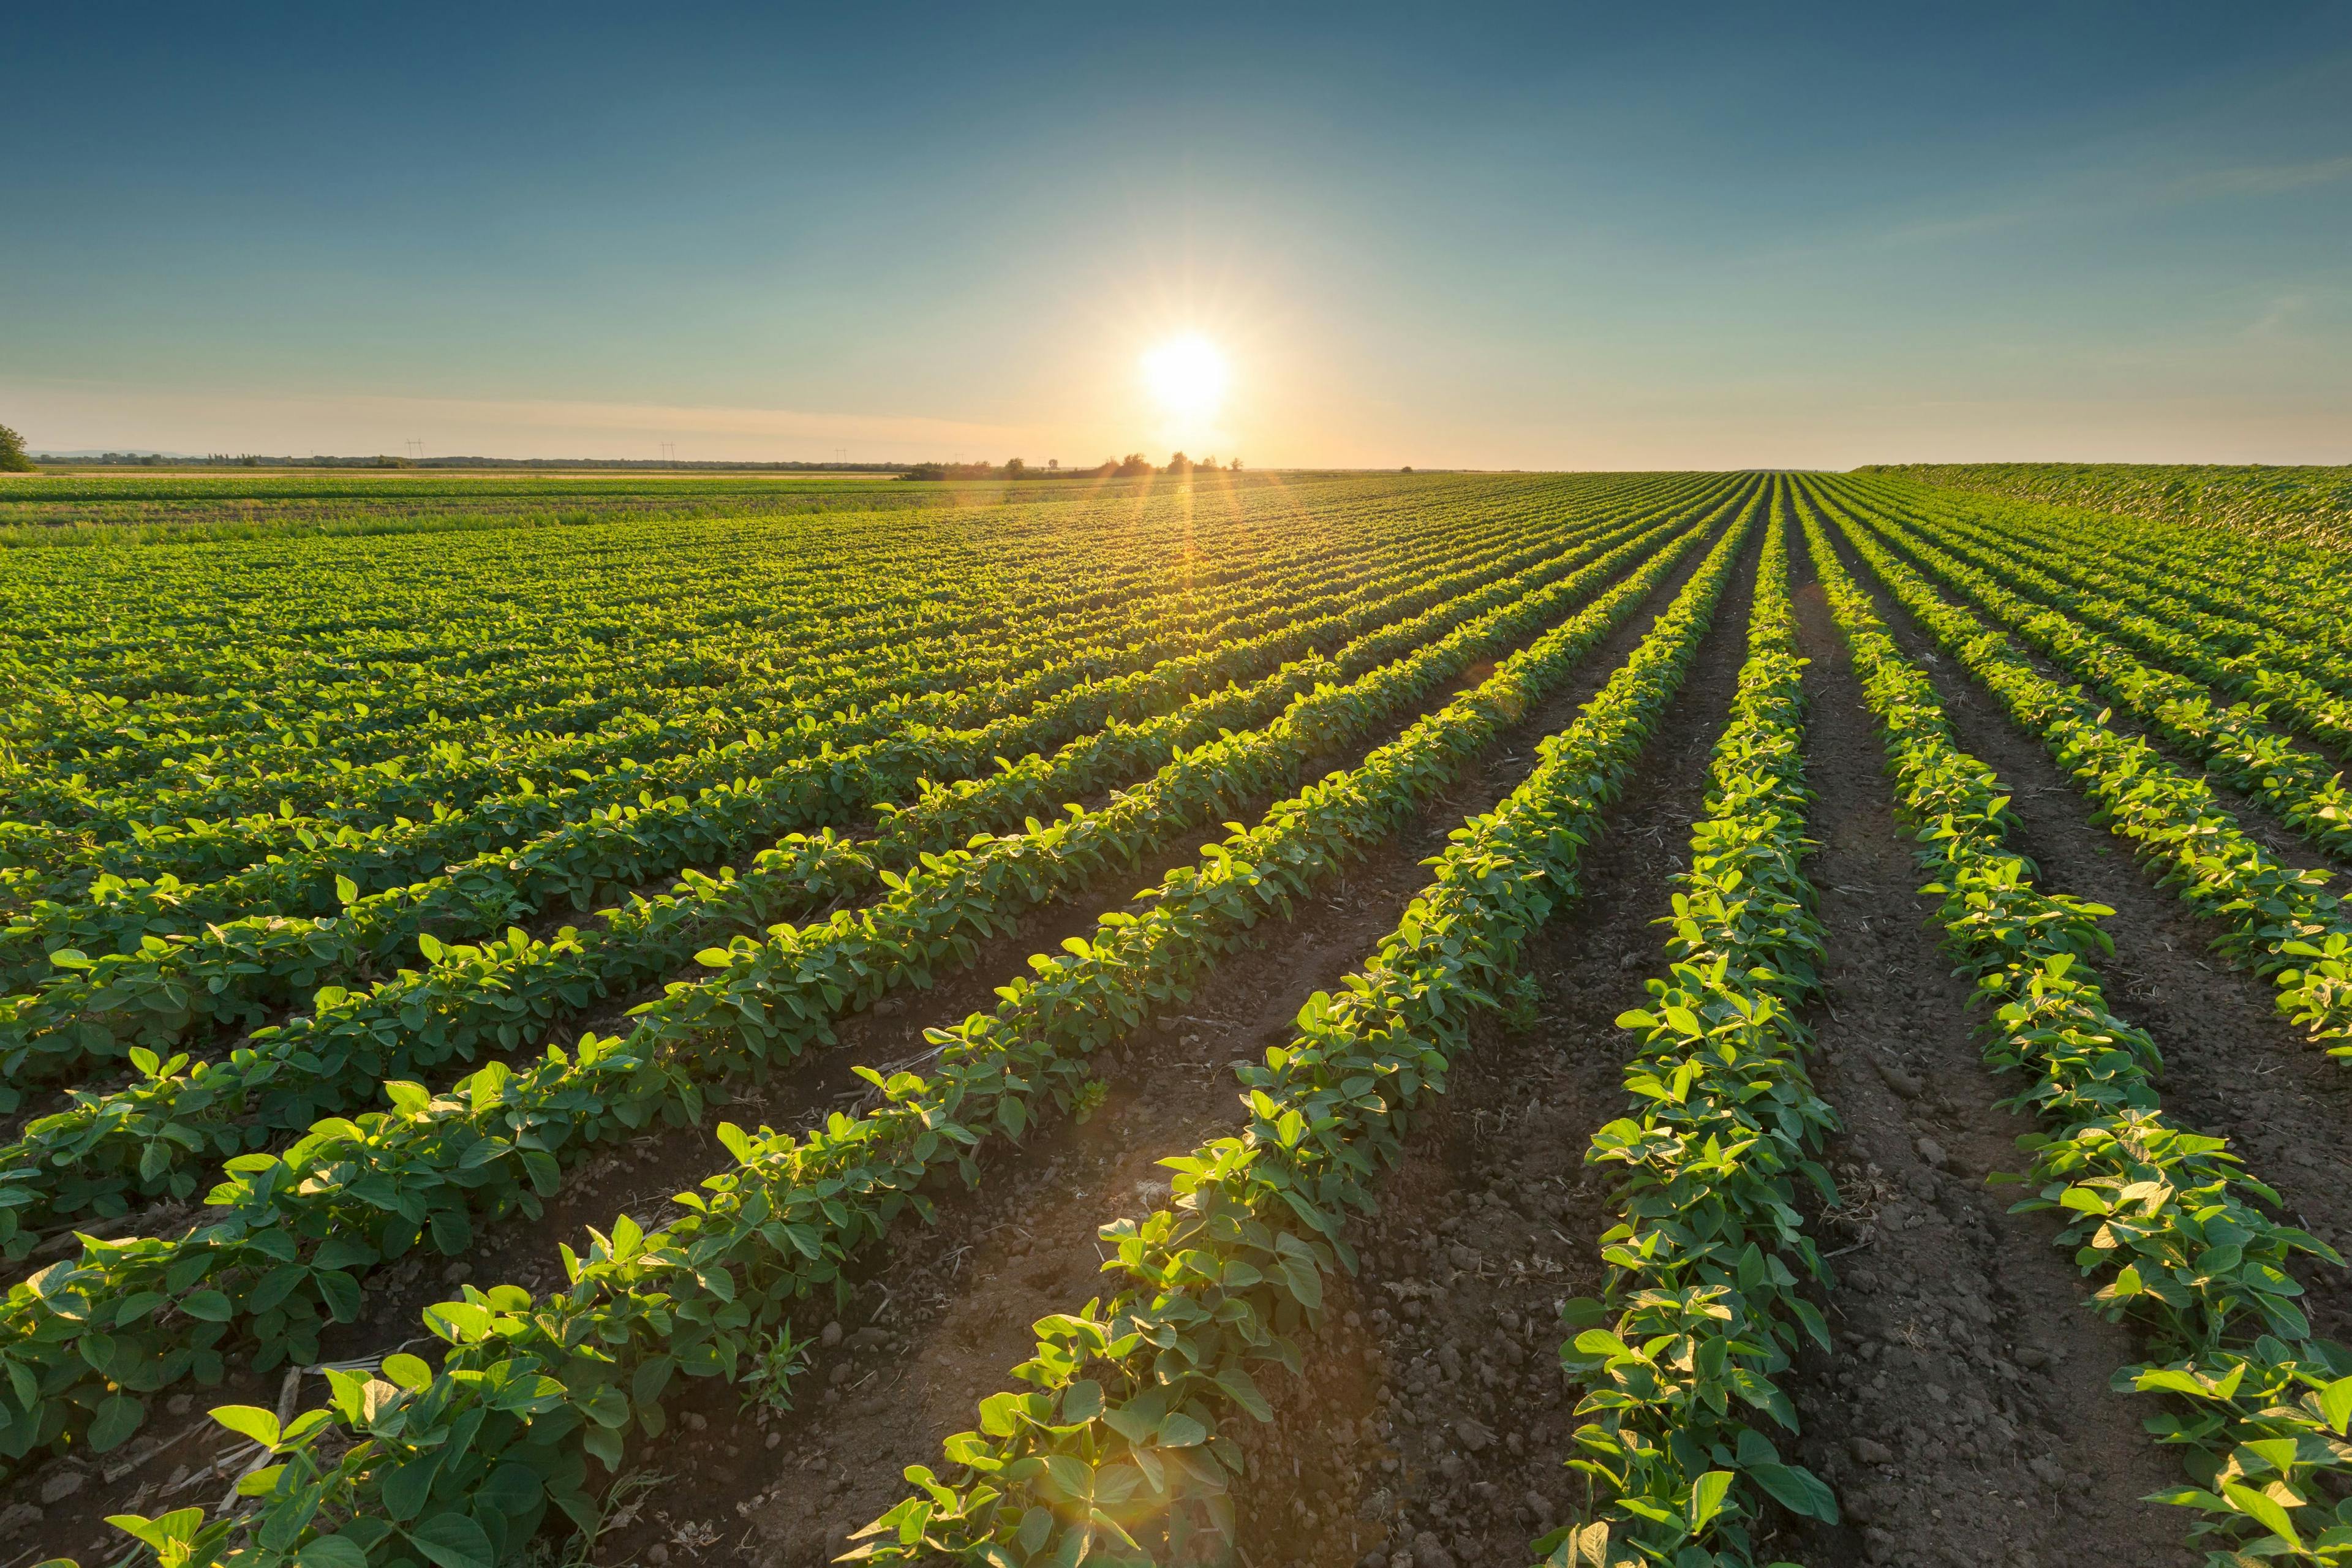 Healthy soybean crops at beautiful sunset | Image Credit: © rasica - stock.adobe.com